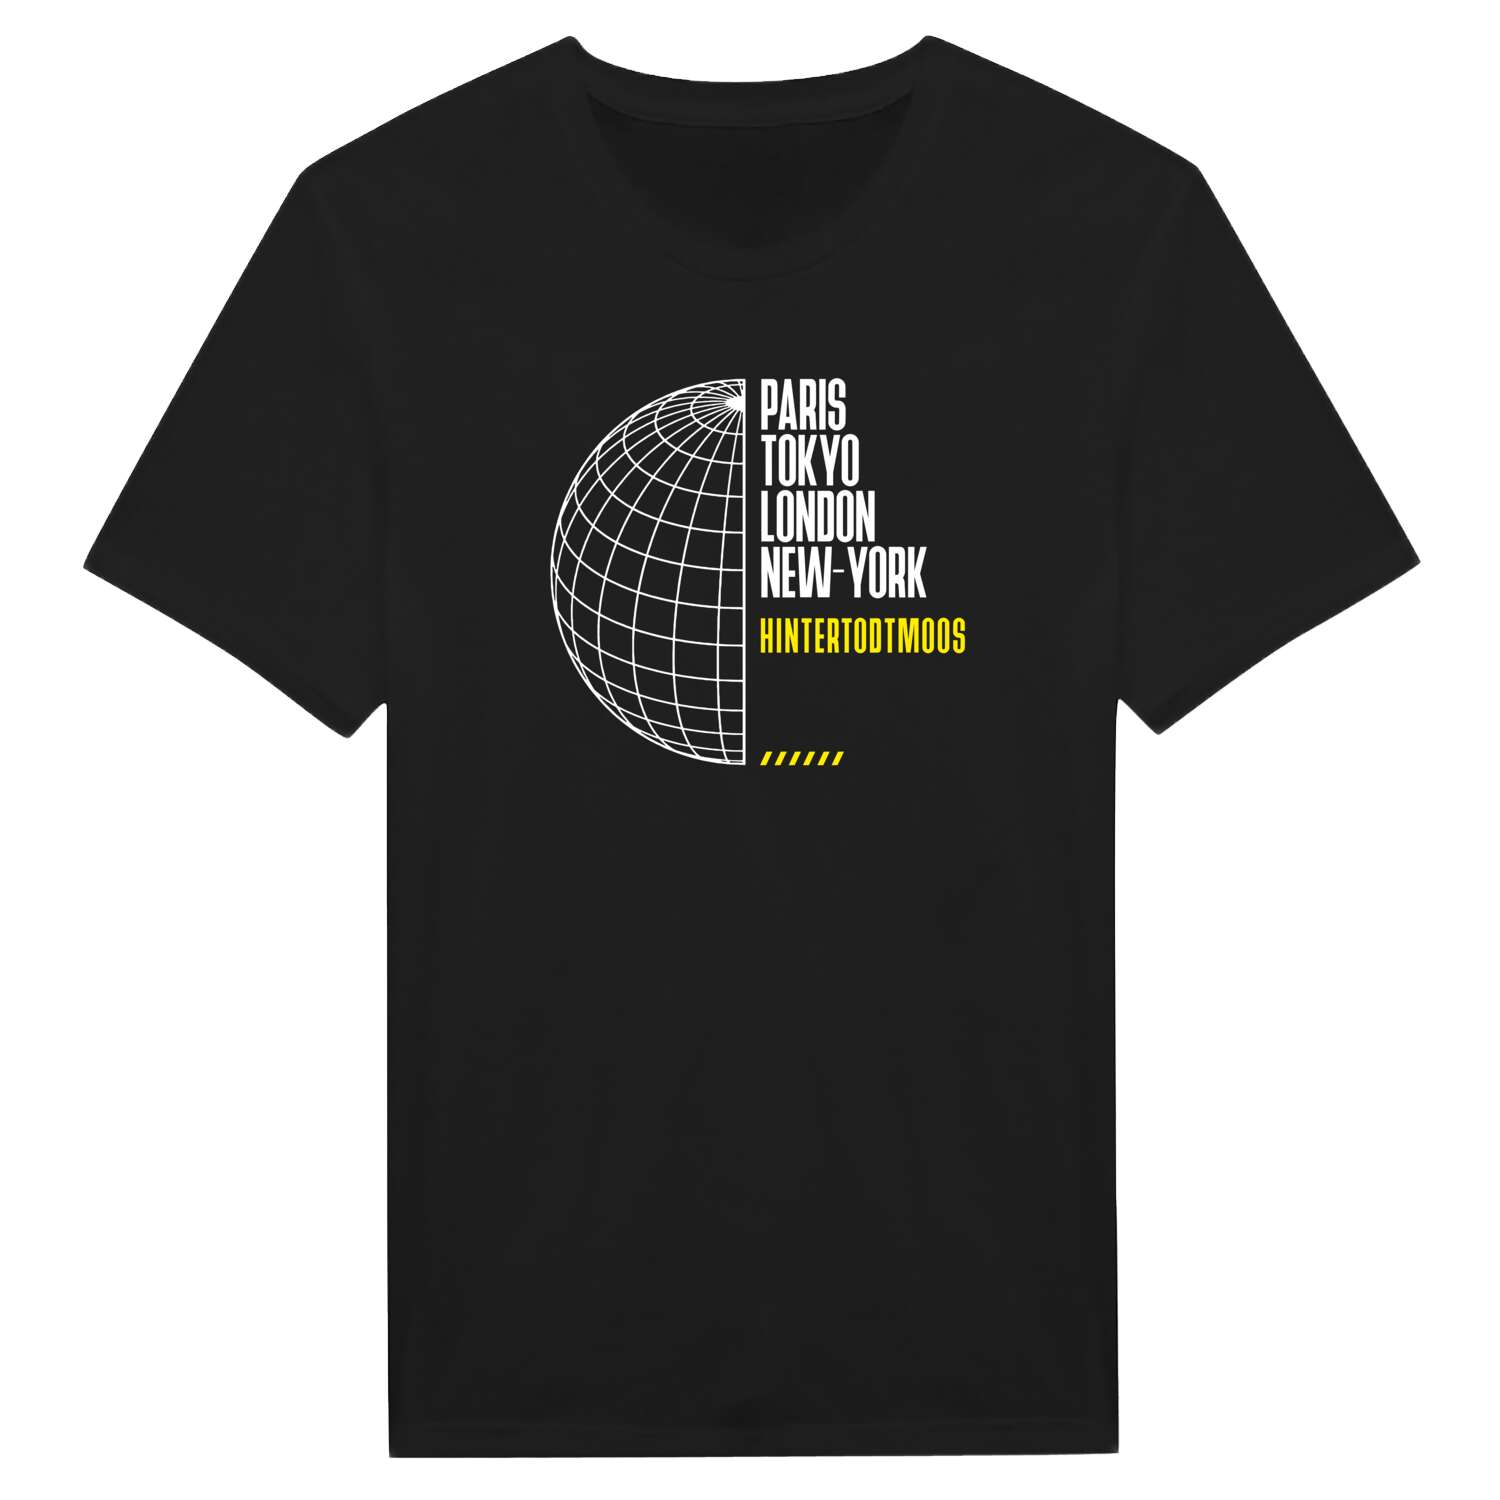 Hintertodtmoos T-Shirt »Paris Tokyo London«